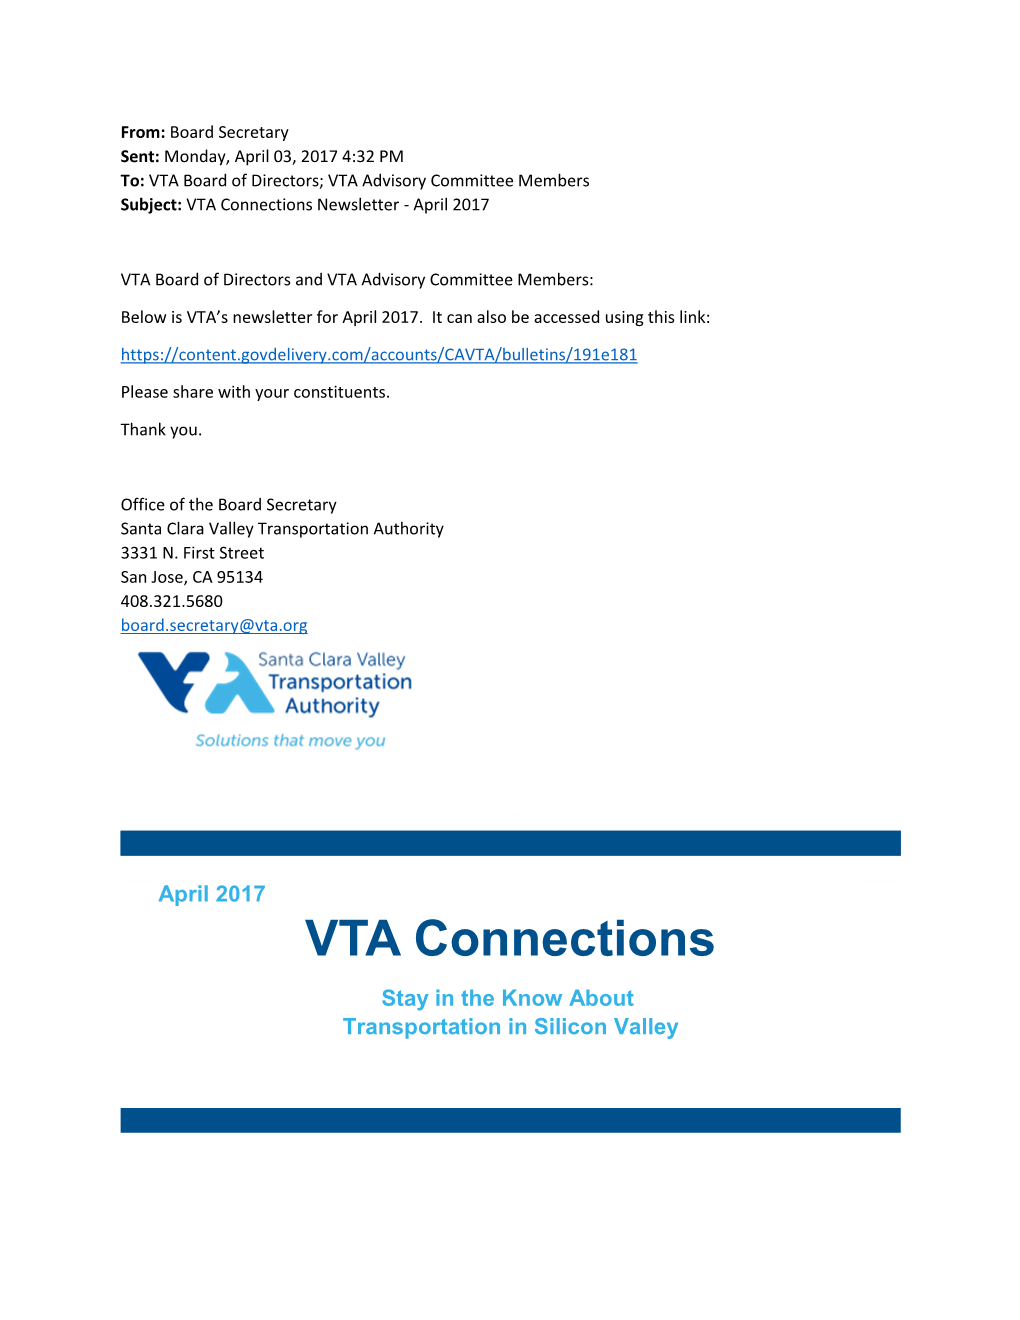 VTA Connections Newsletter - April 2017